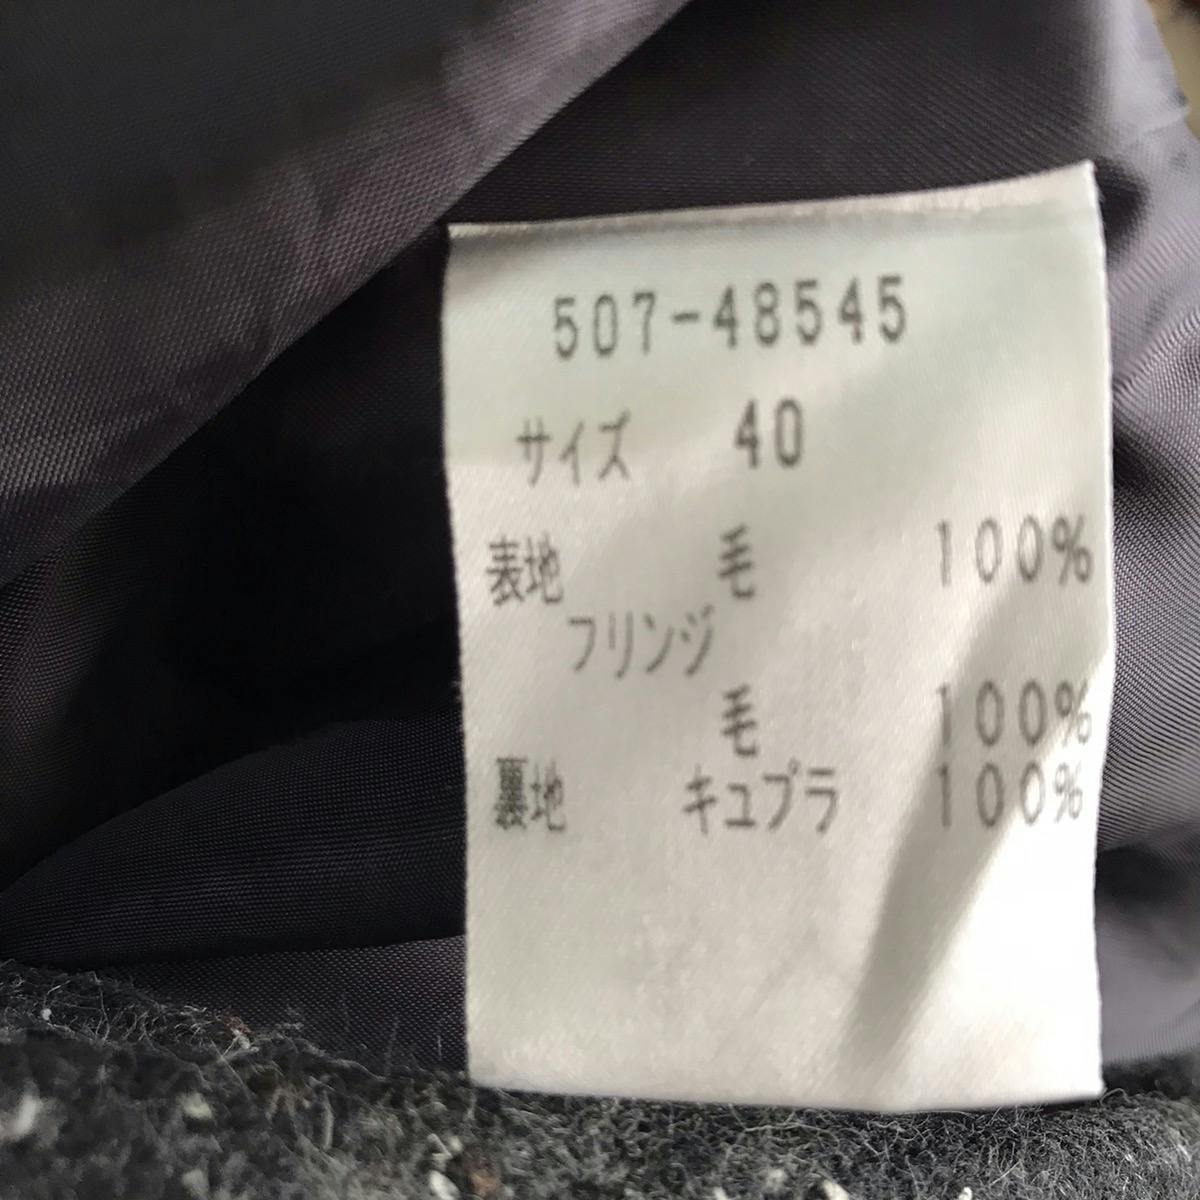 Carven paris jacket made in Japan - 15